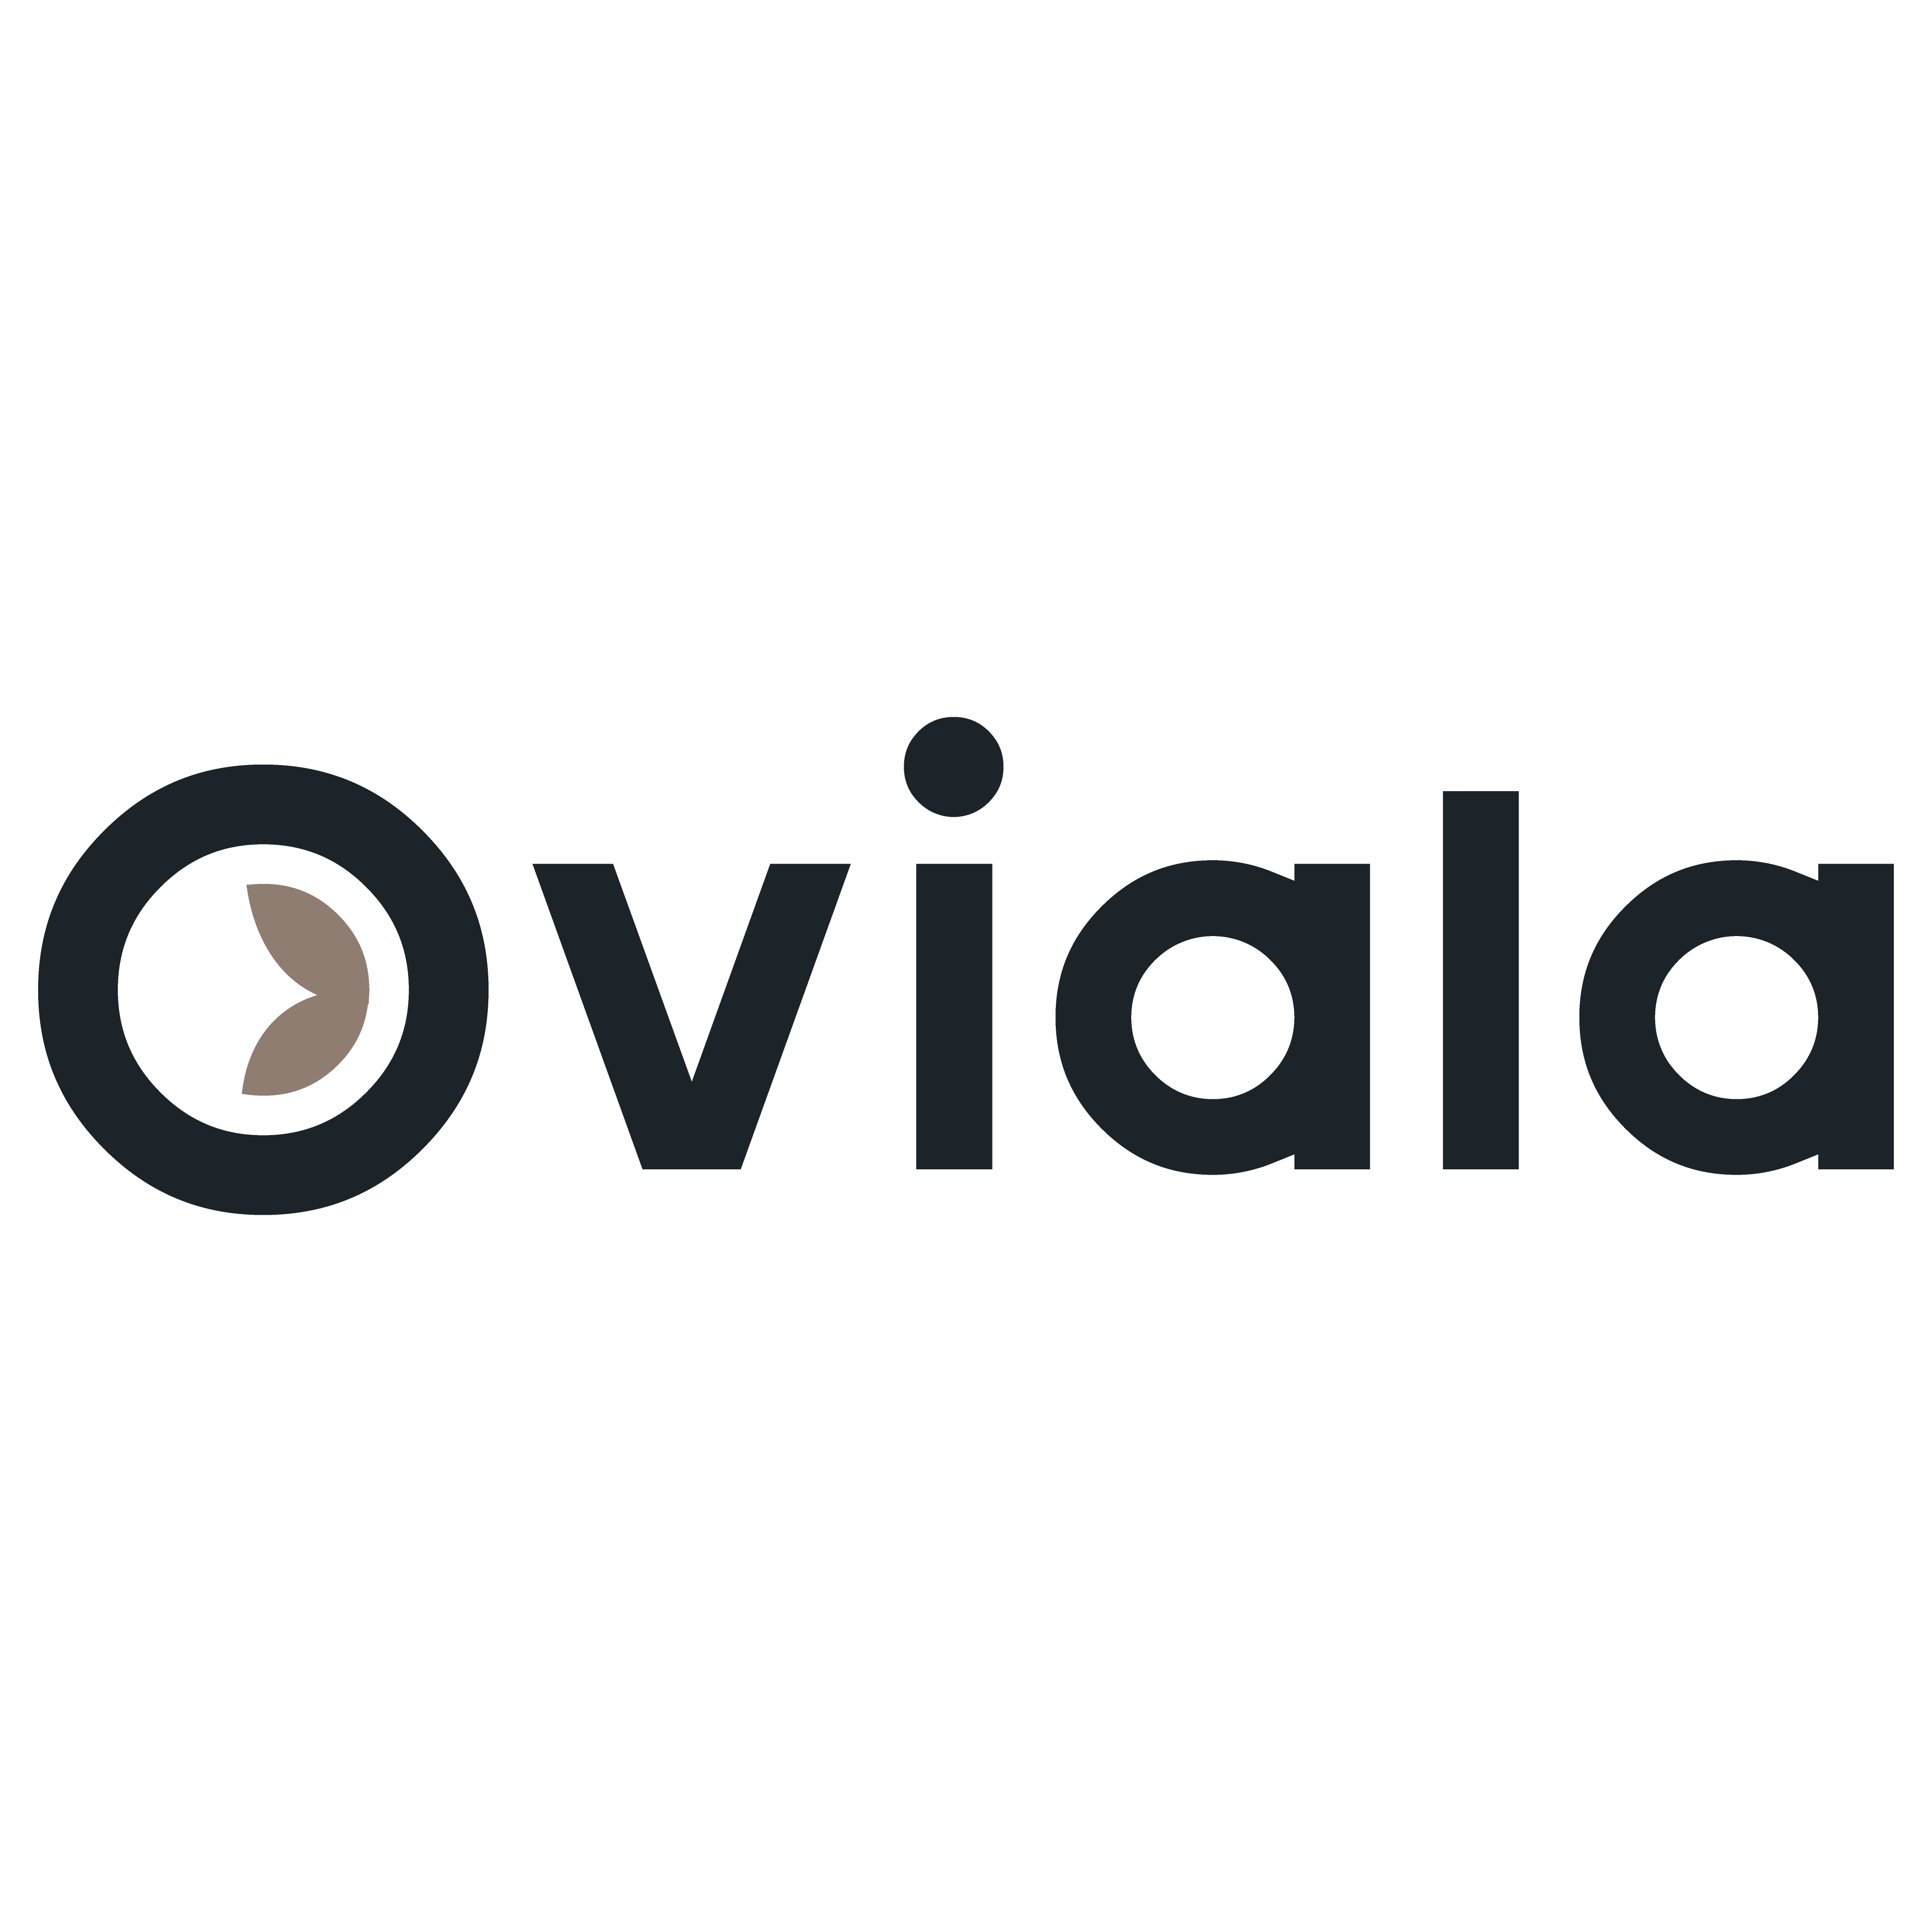 Oviala business